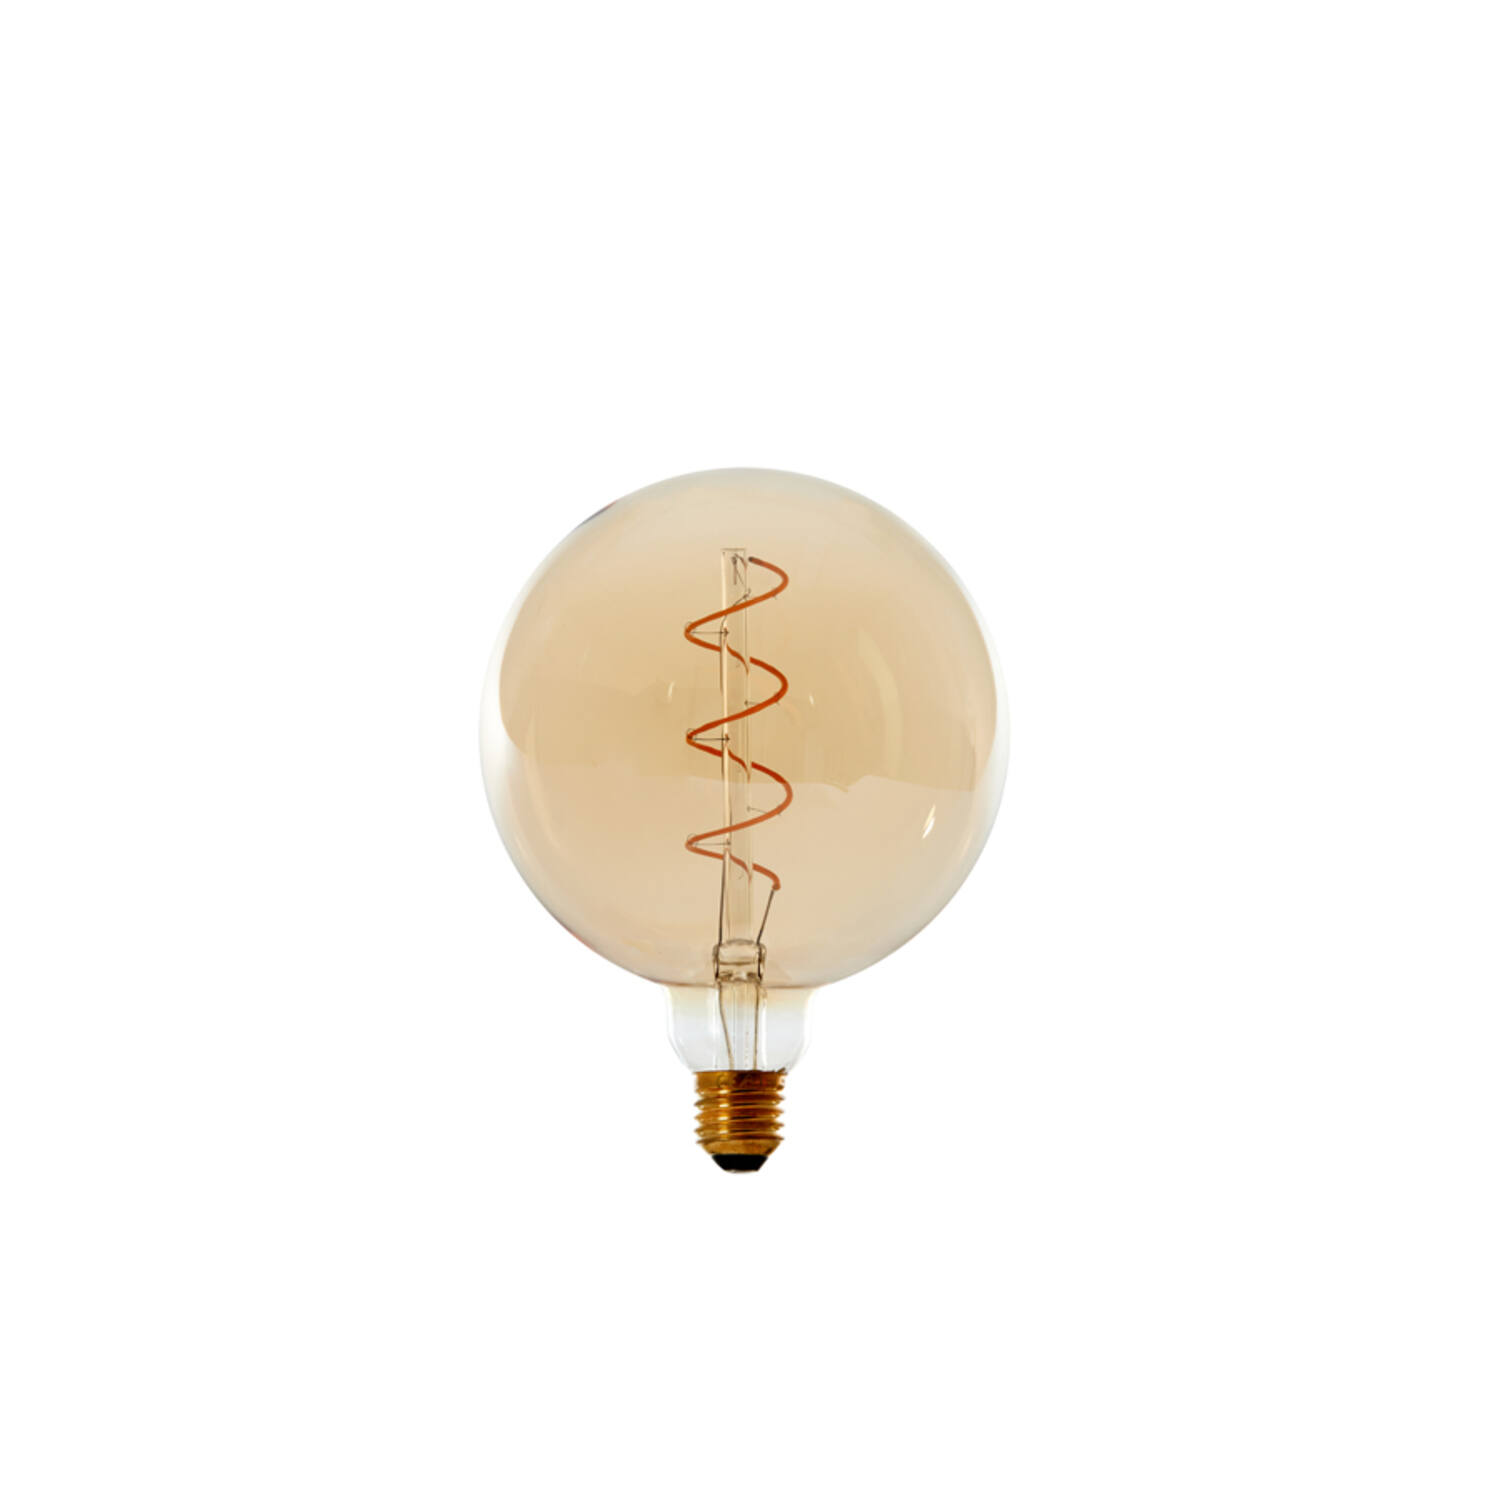 Deco LED globe Ø15x20 cm LIGHT 4W amber E27 dimmable